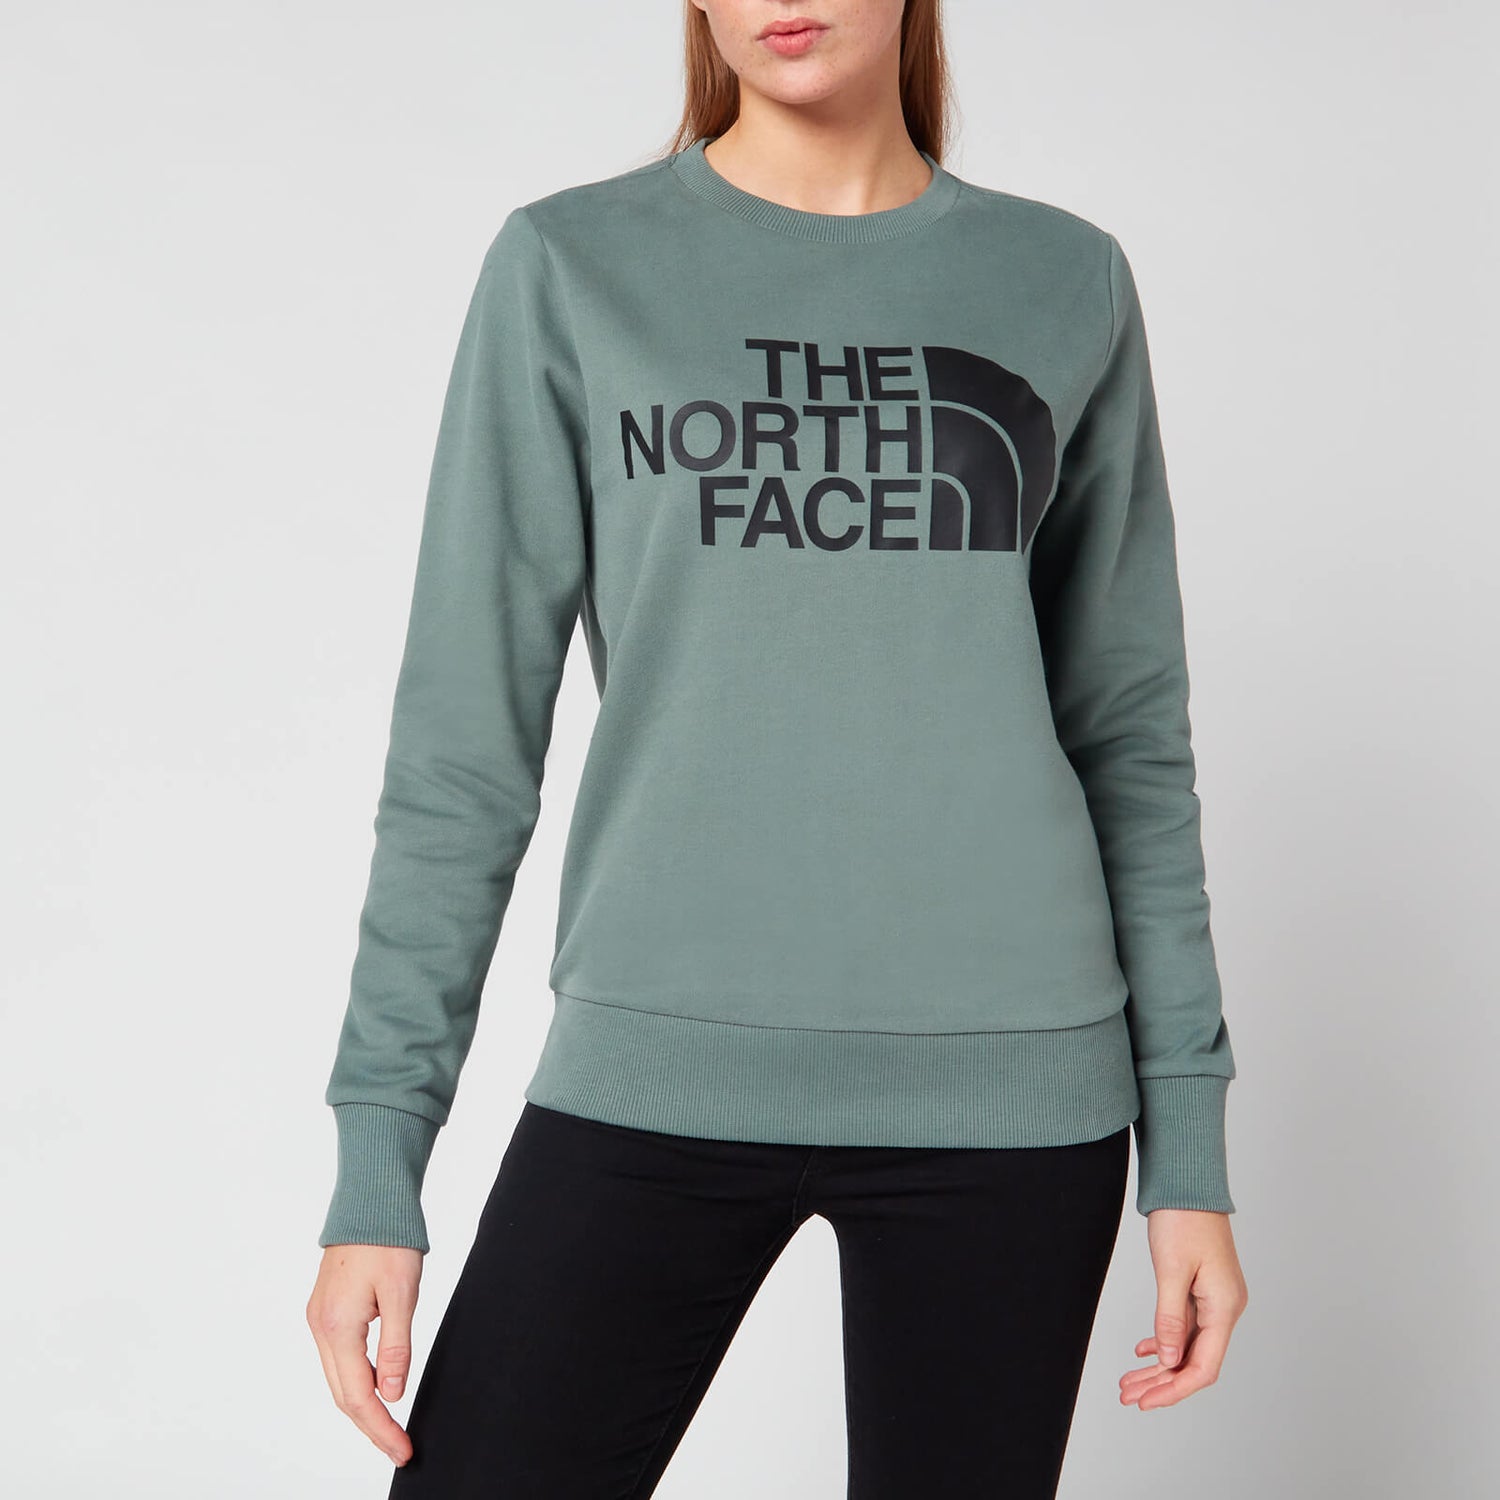 The North Face Women's Standard Crew Sweatshirt - Light Green - XS